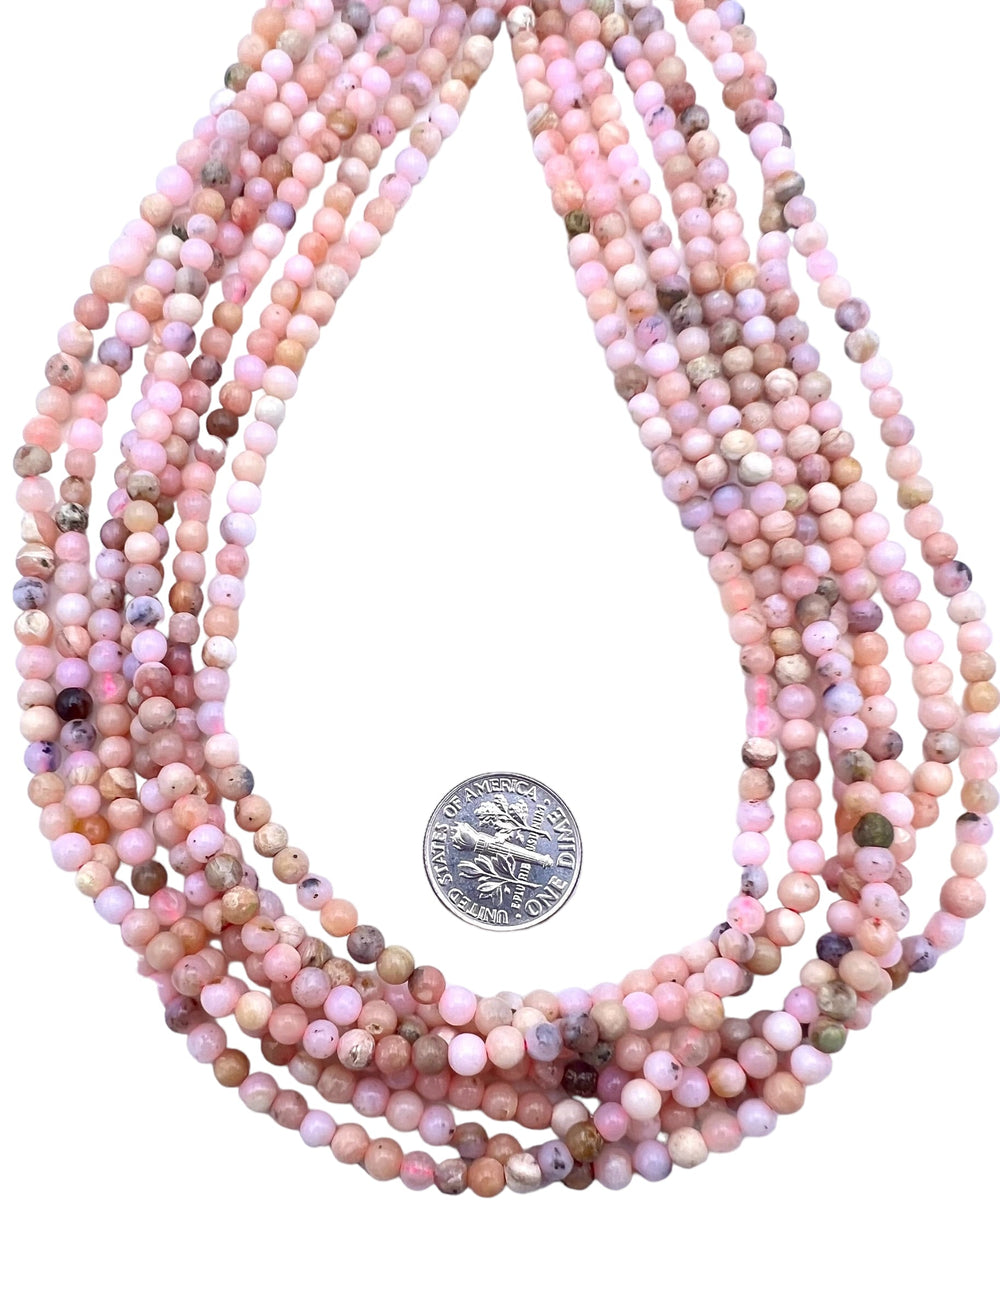 Peruvian Pink Opal 4mm Round Beads 16 inch strand - Opal |